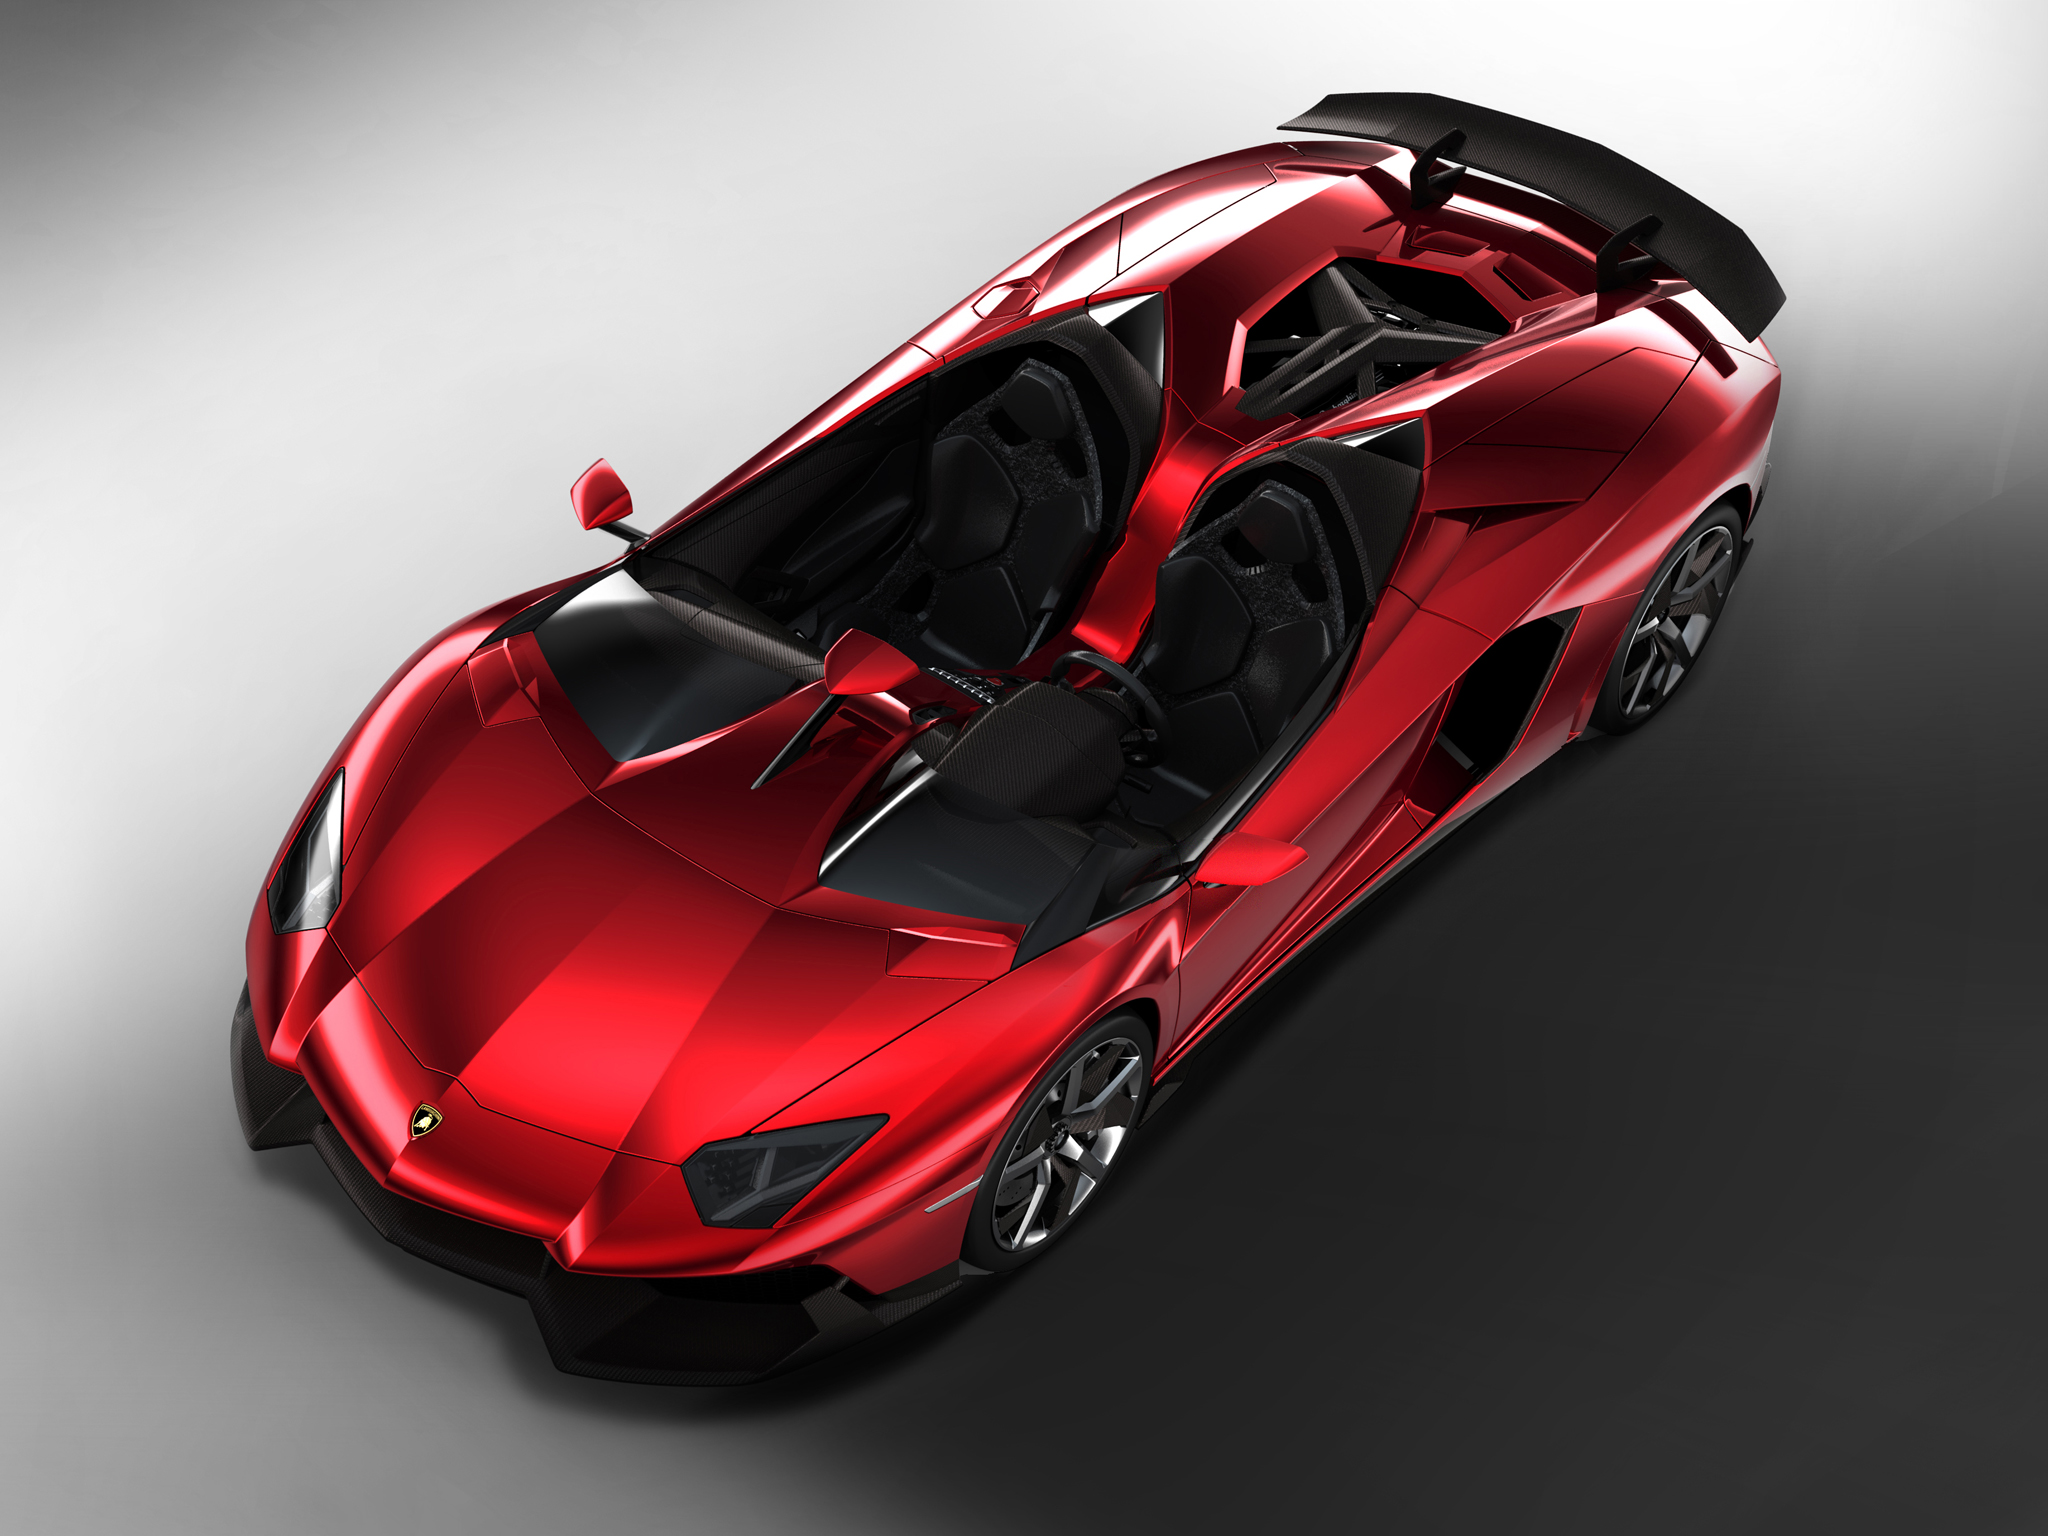 Télécharger des fonds d'écran Lamborghini Aventador J HD